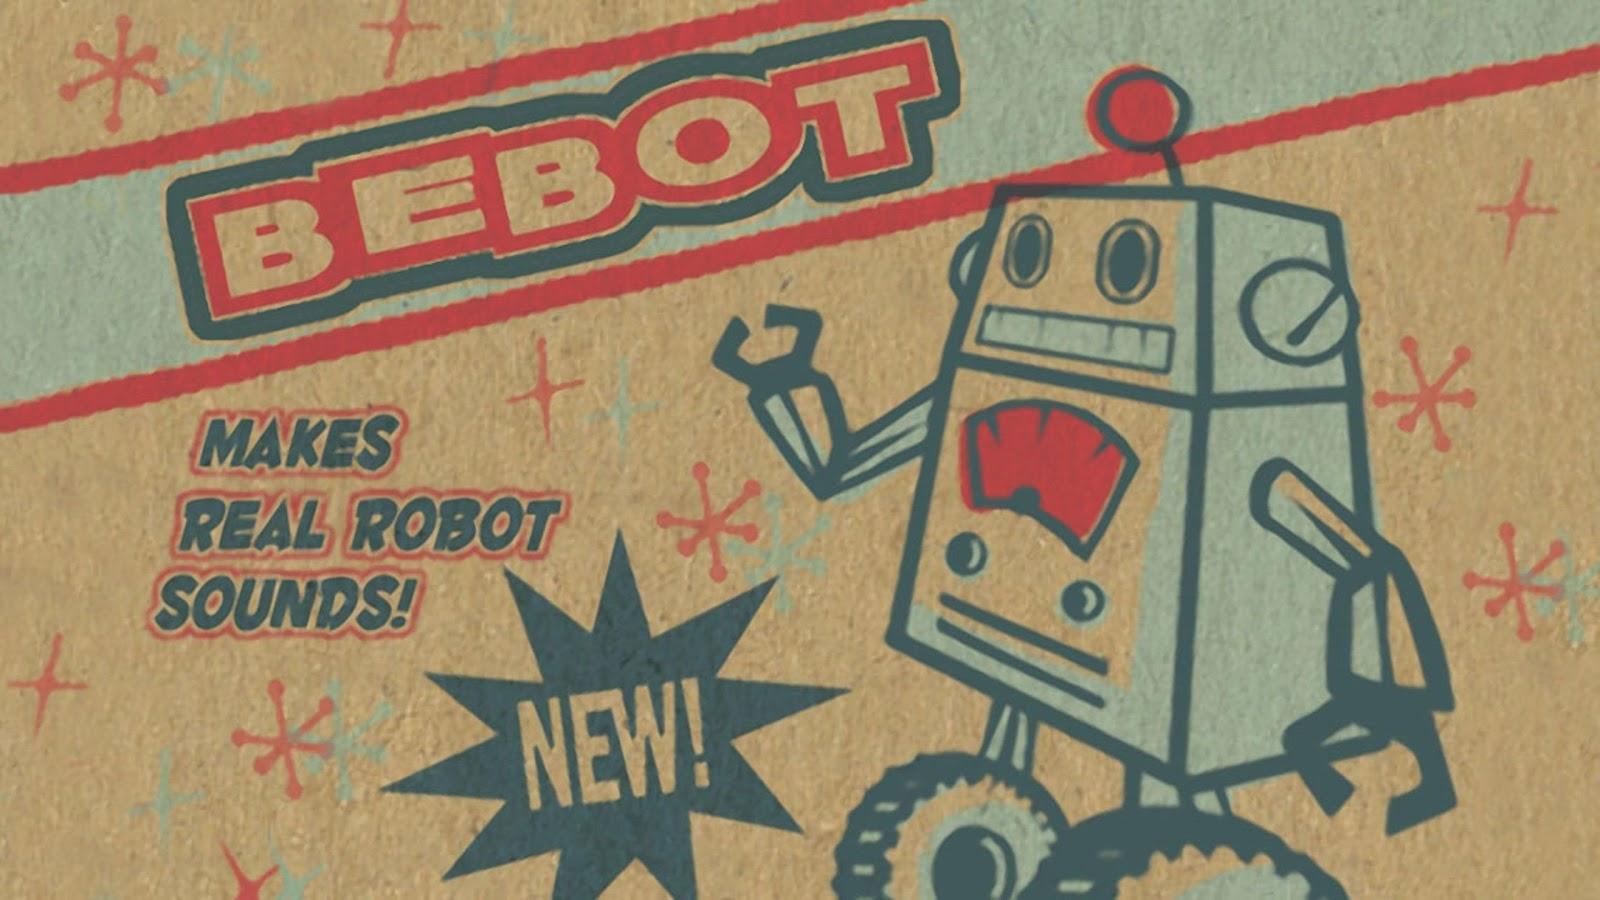 Bebot bebot song download mp3 song